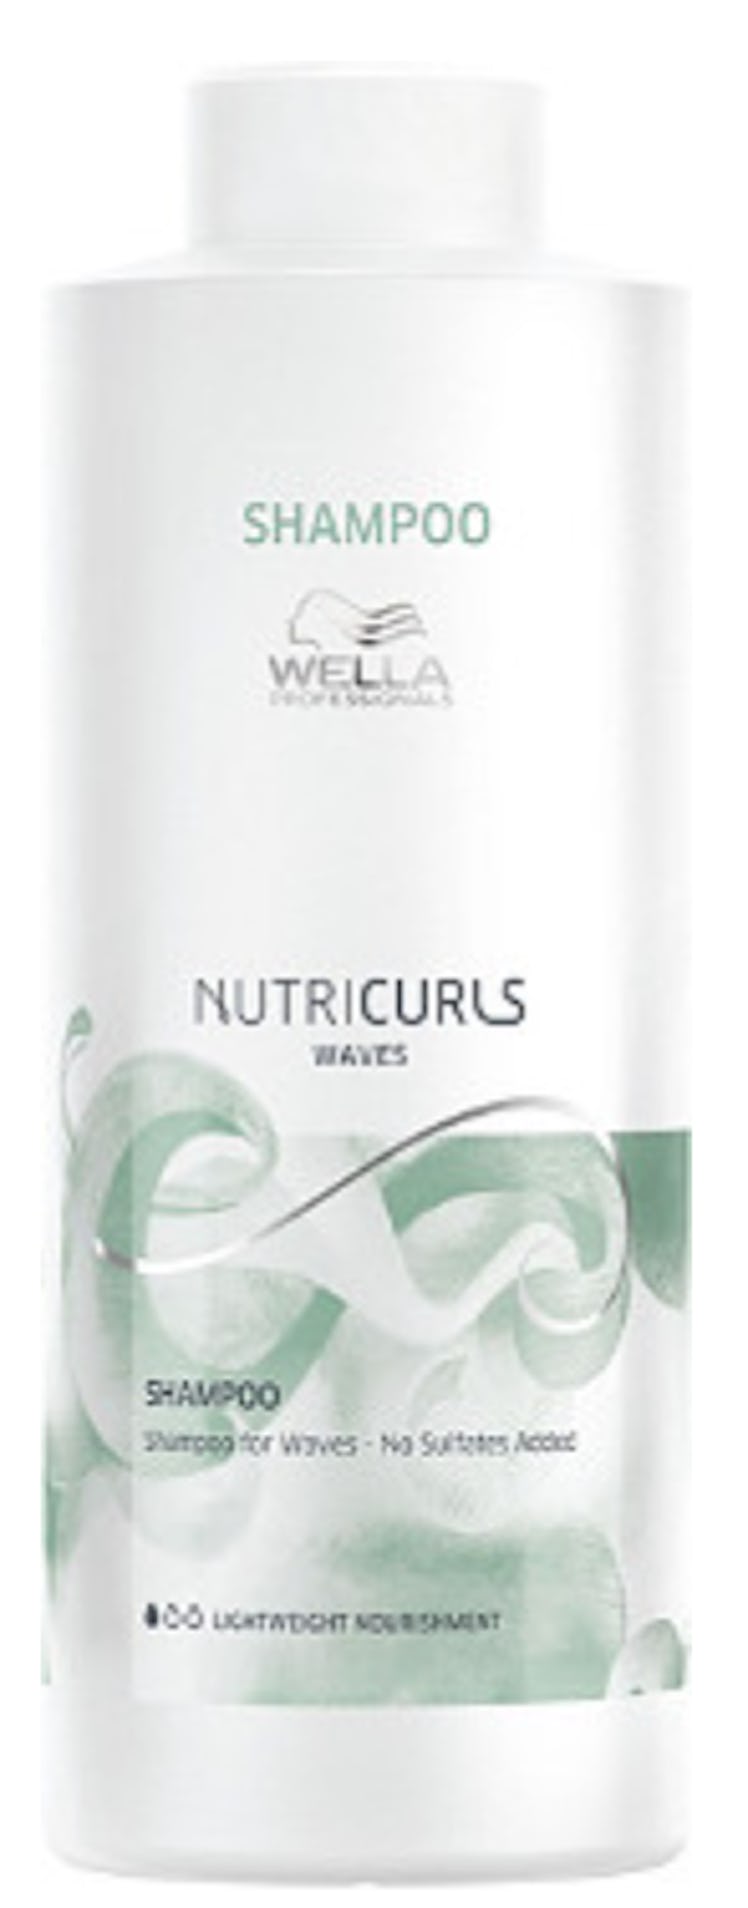 Nutricurls Waves Shampoo